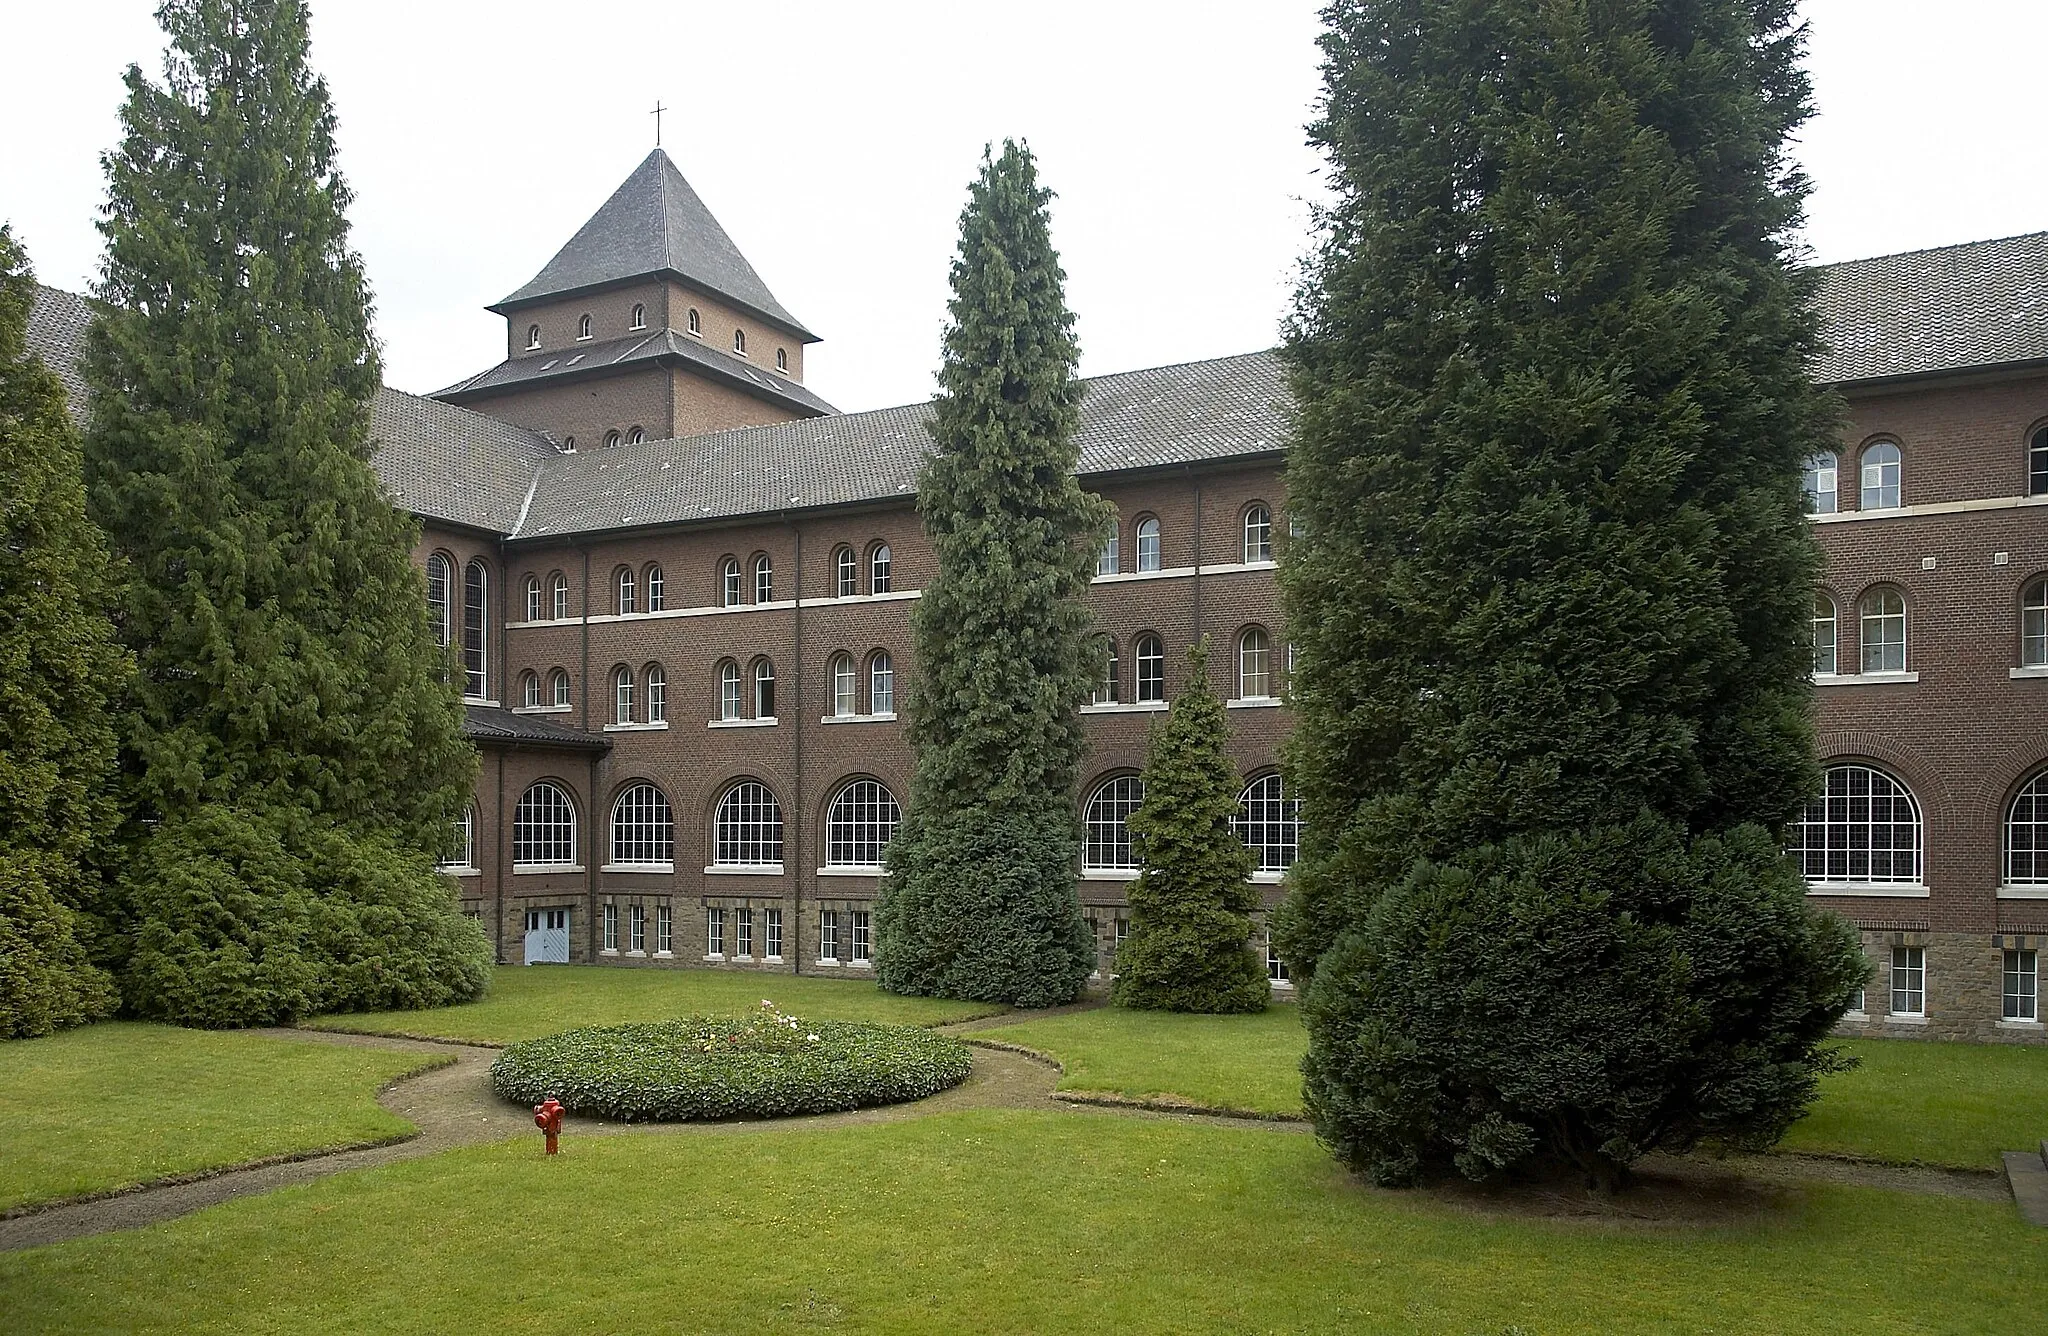 Photo showing: Monastery and center "La Foresta" in Vaalbeek, Belgium